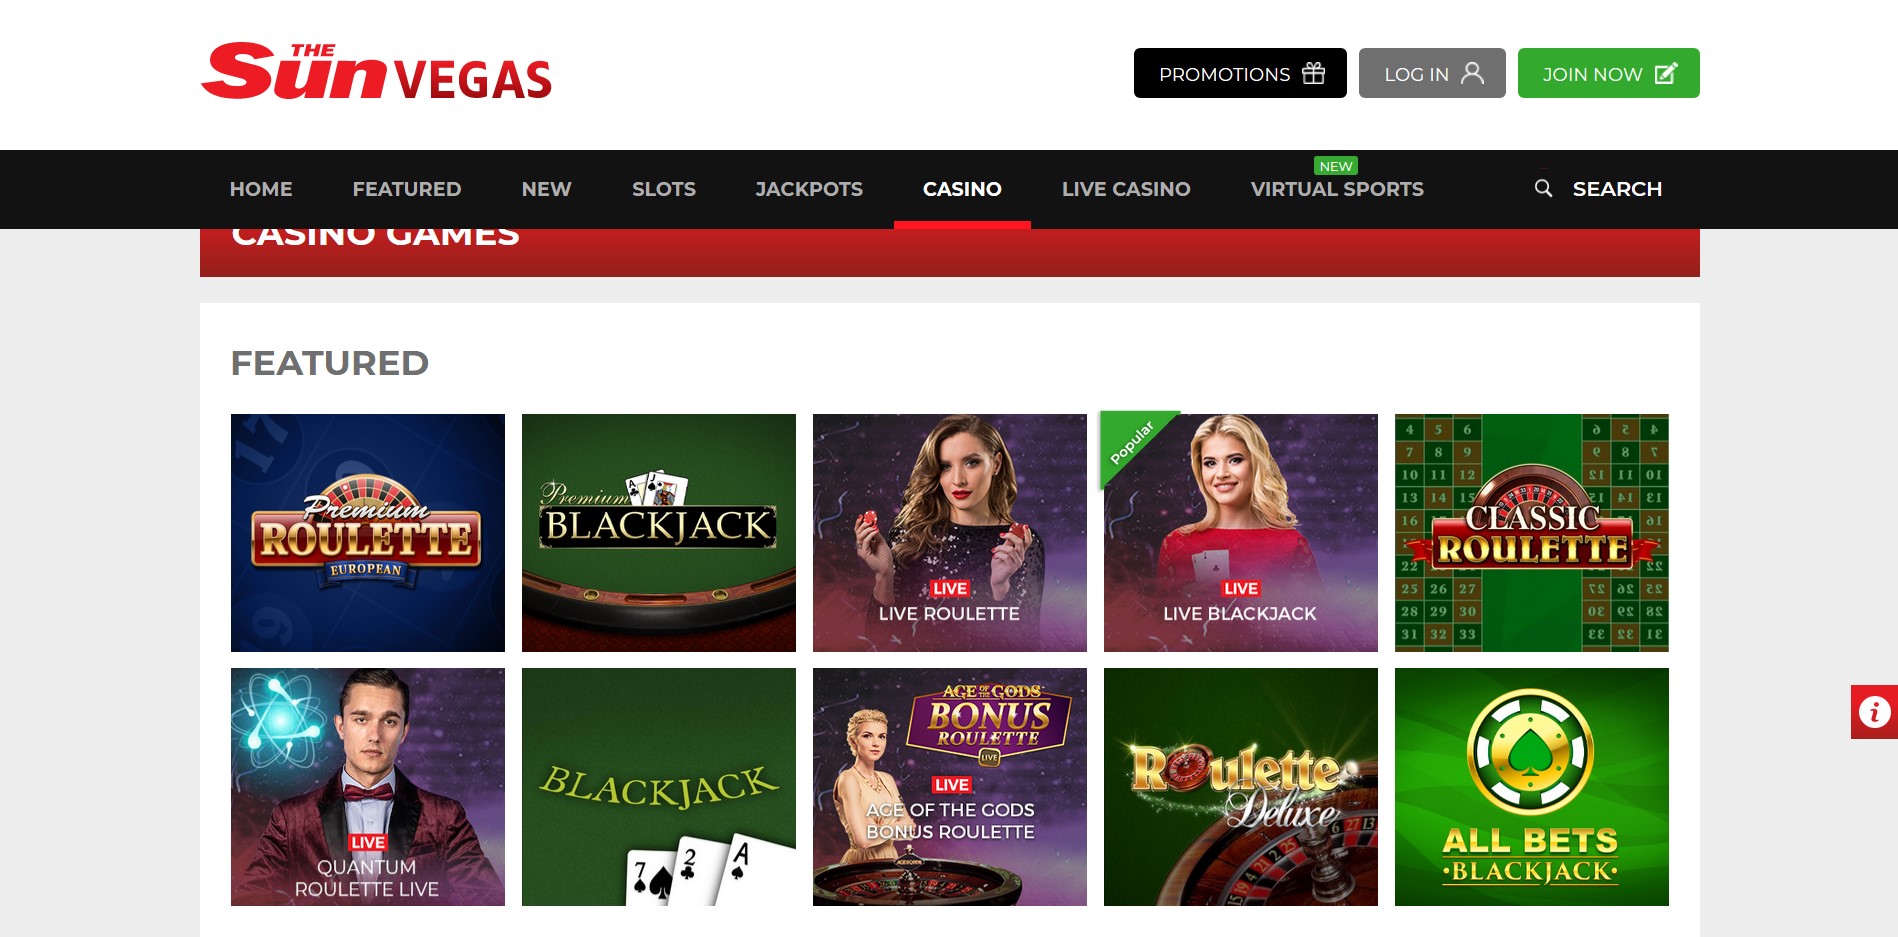 The Sun Vegas Casino Games